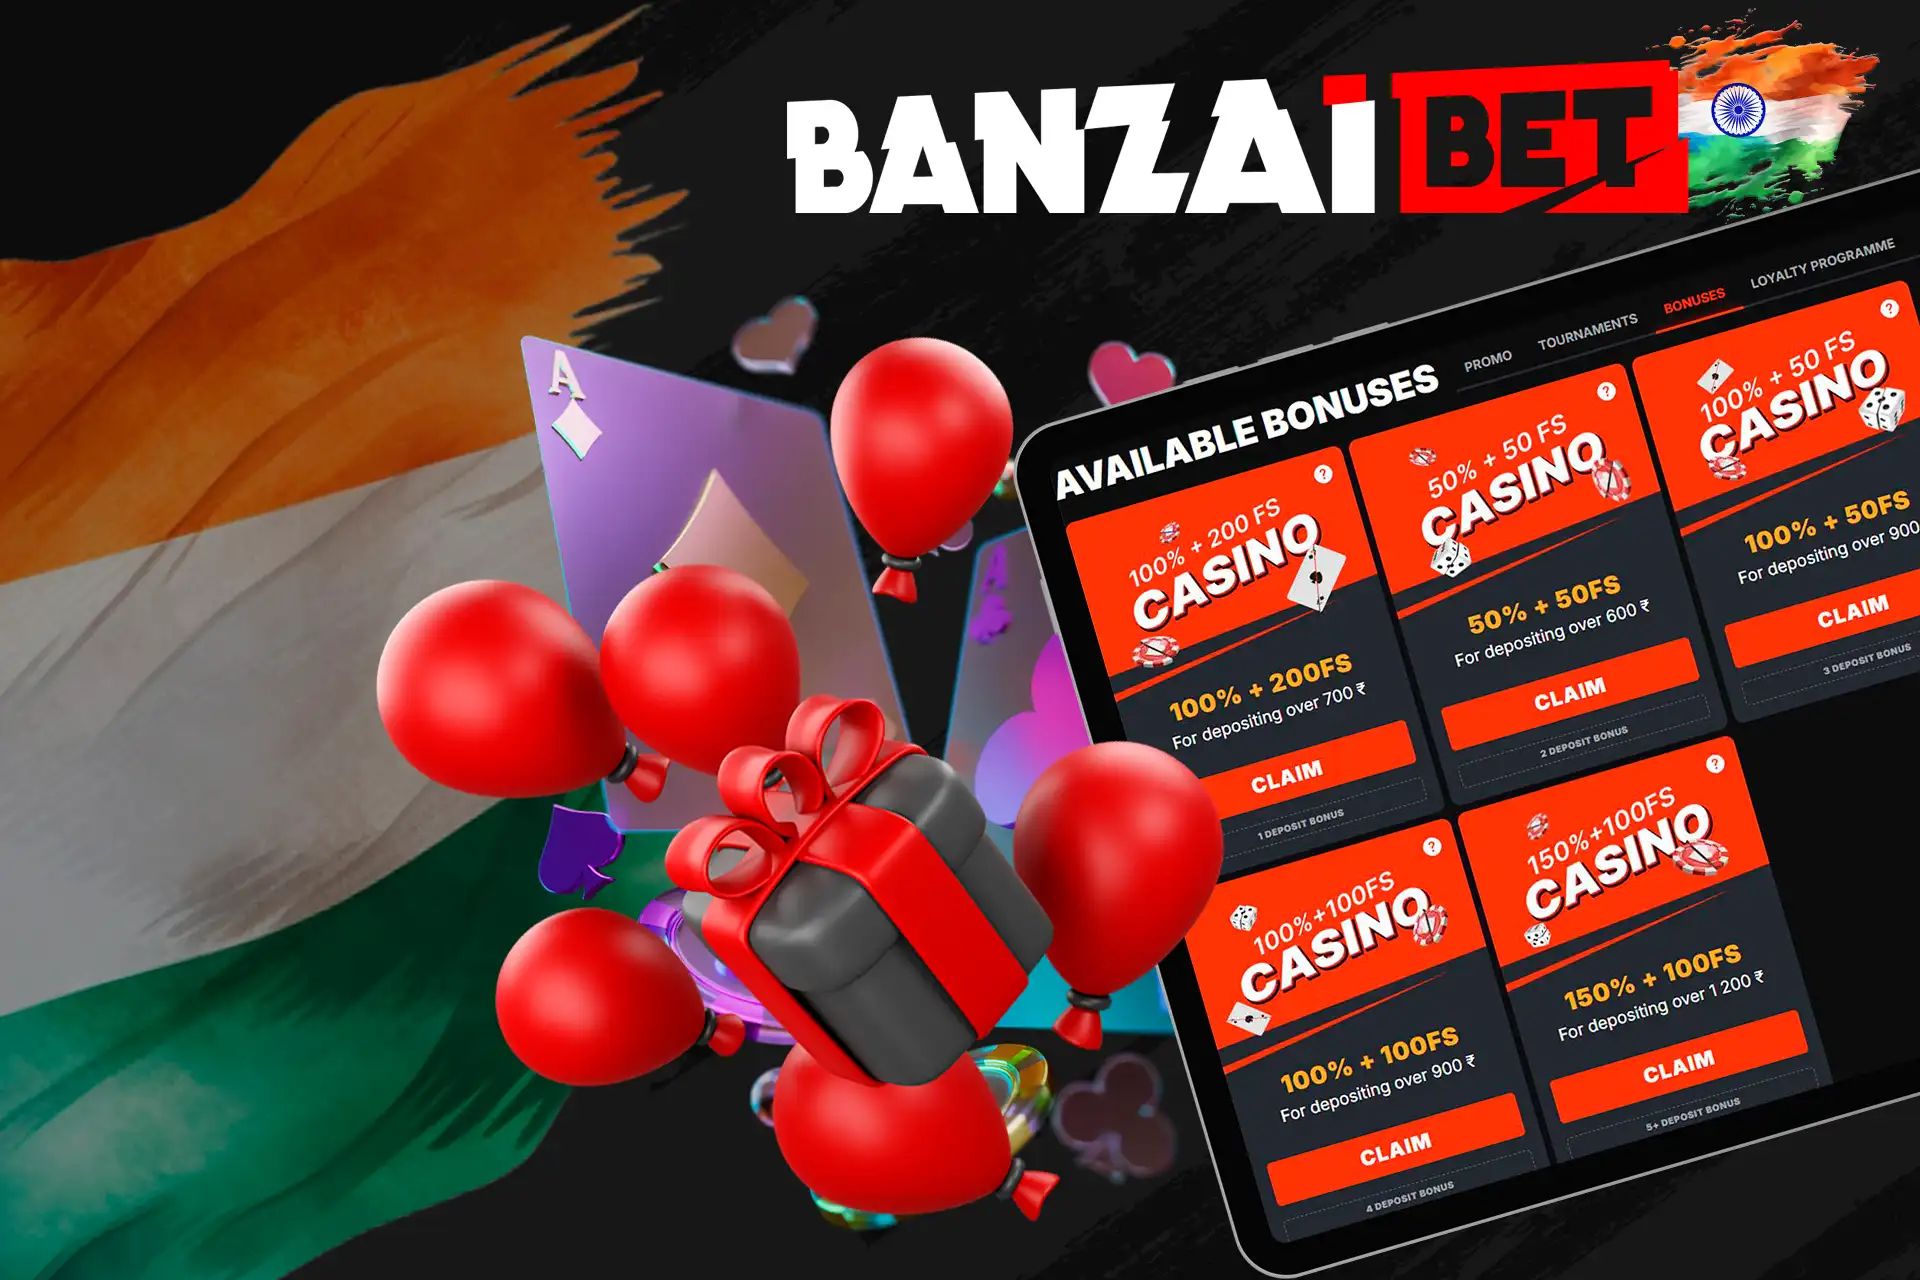 Lots of bonus casino offers at Banzaibet India